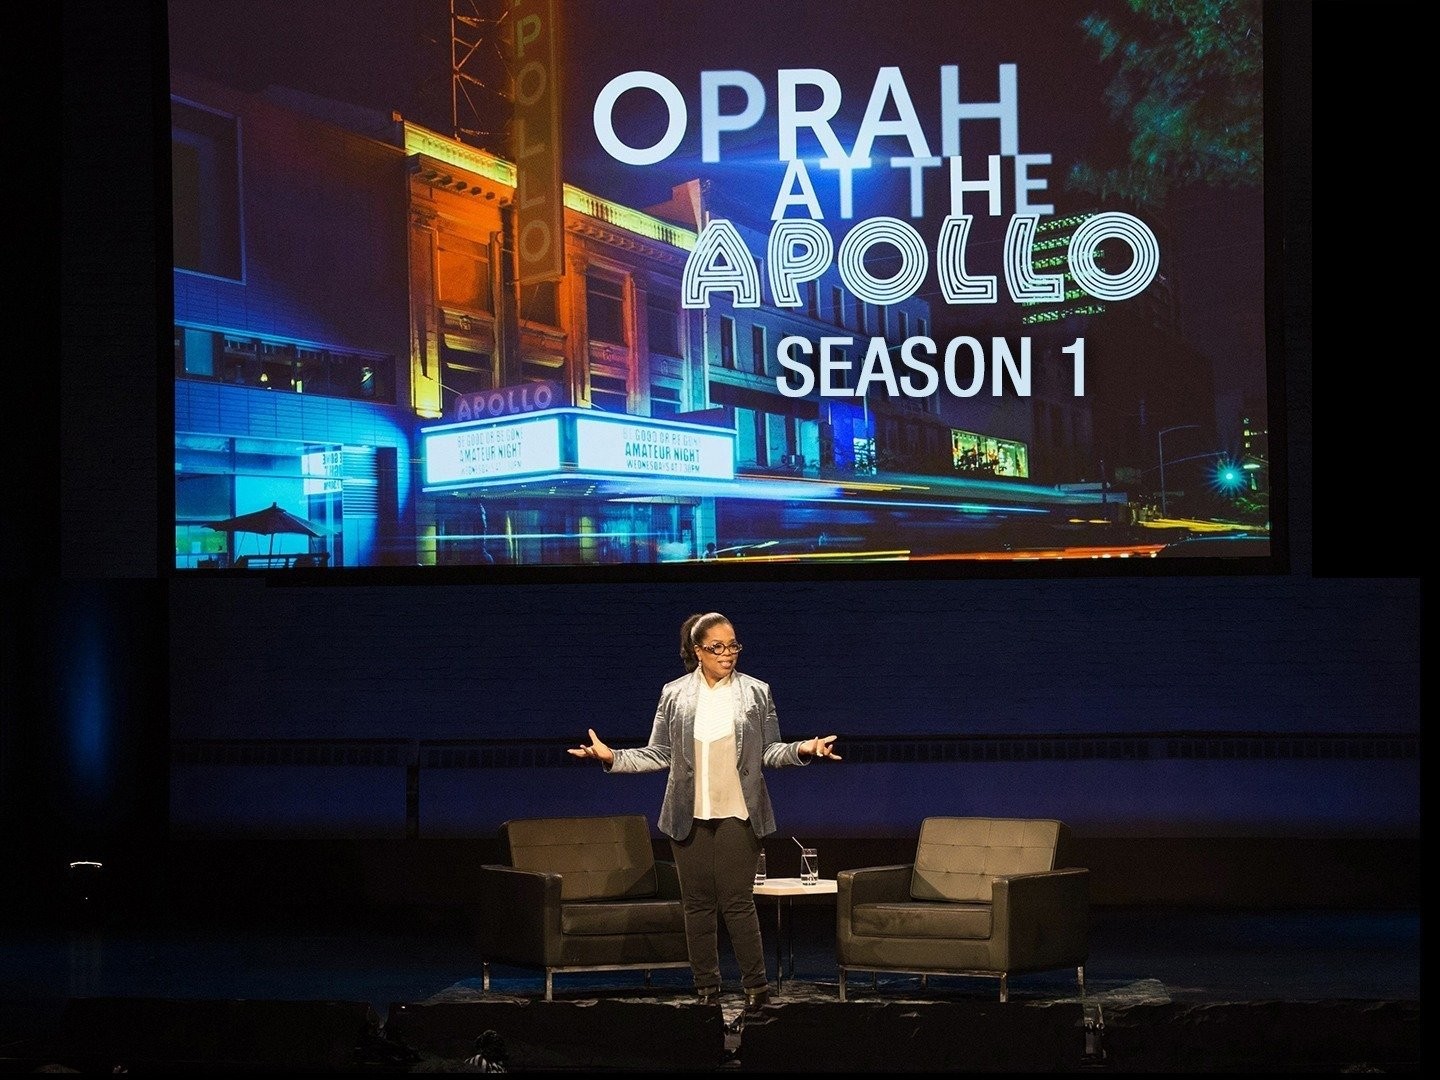 Oprah at the Apollo Season 1 Pictures picture